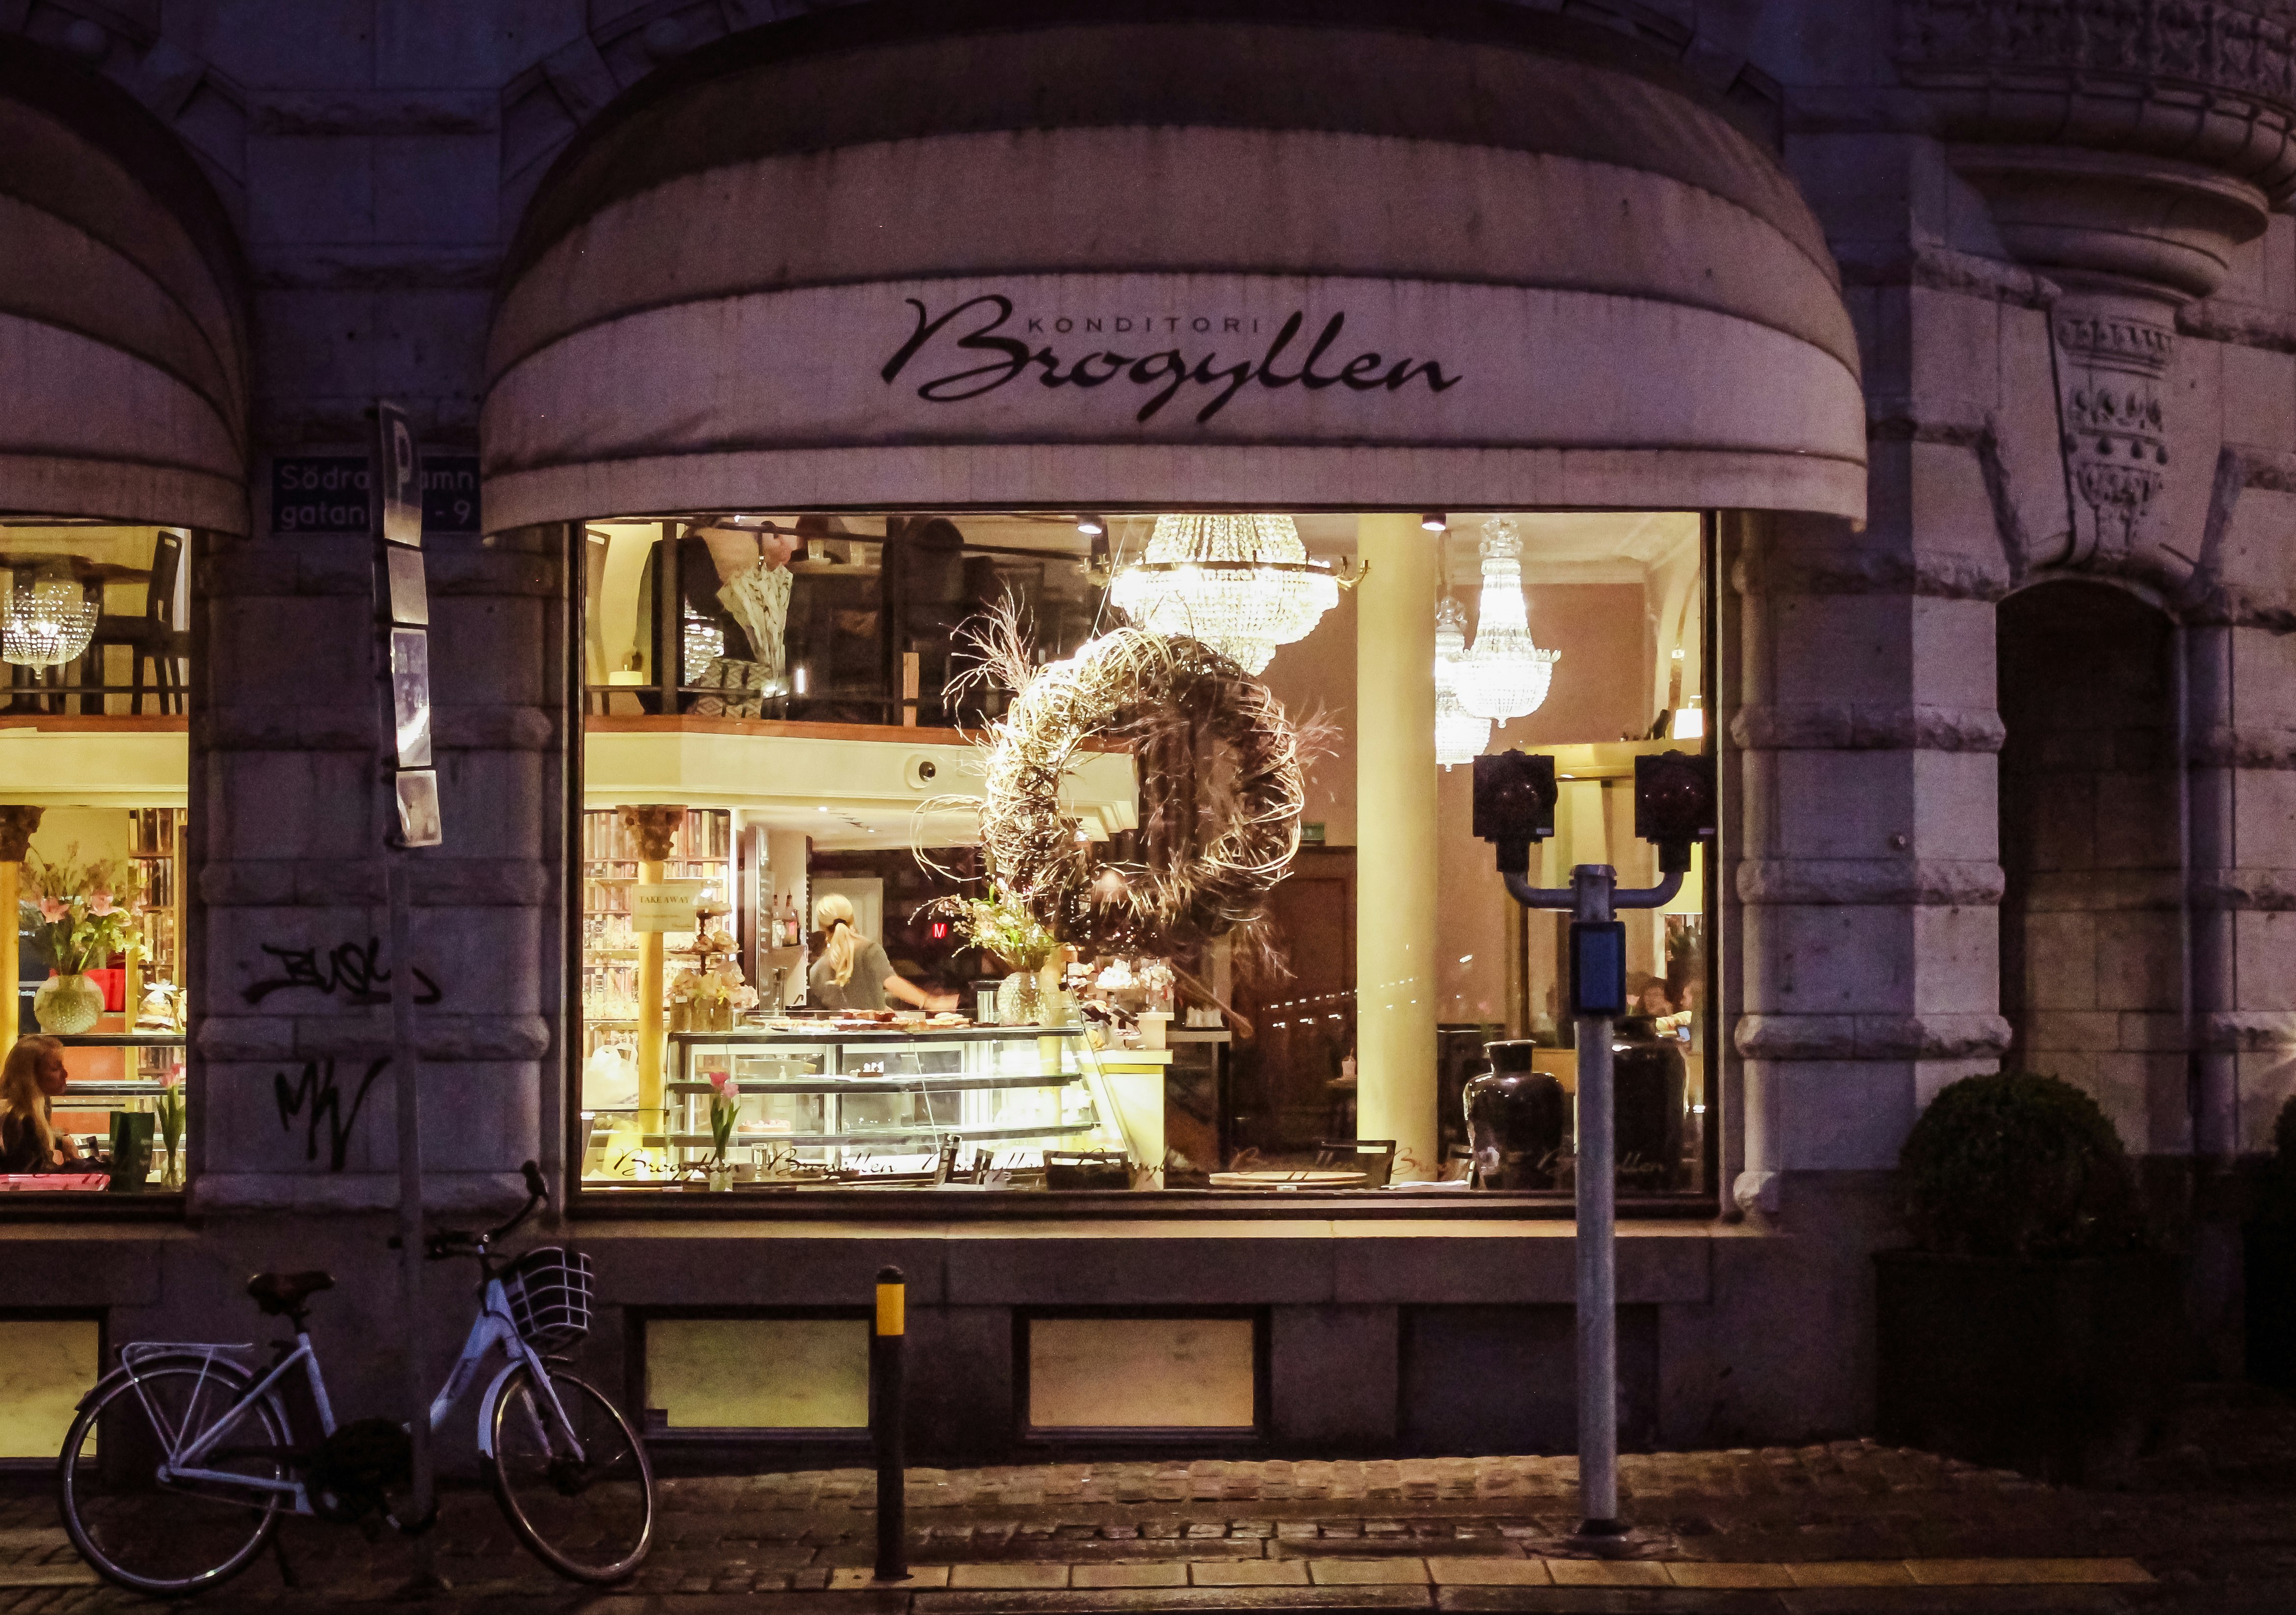 Brogyllen store with lights